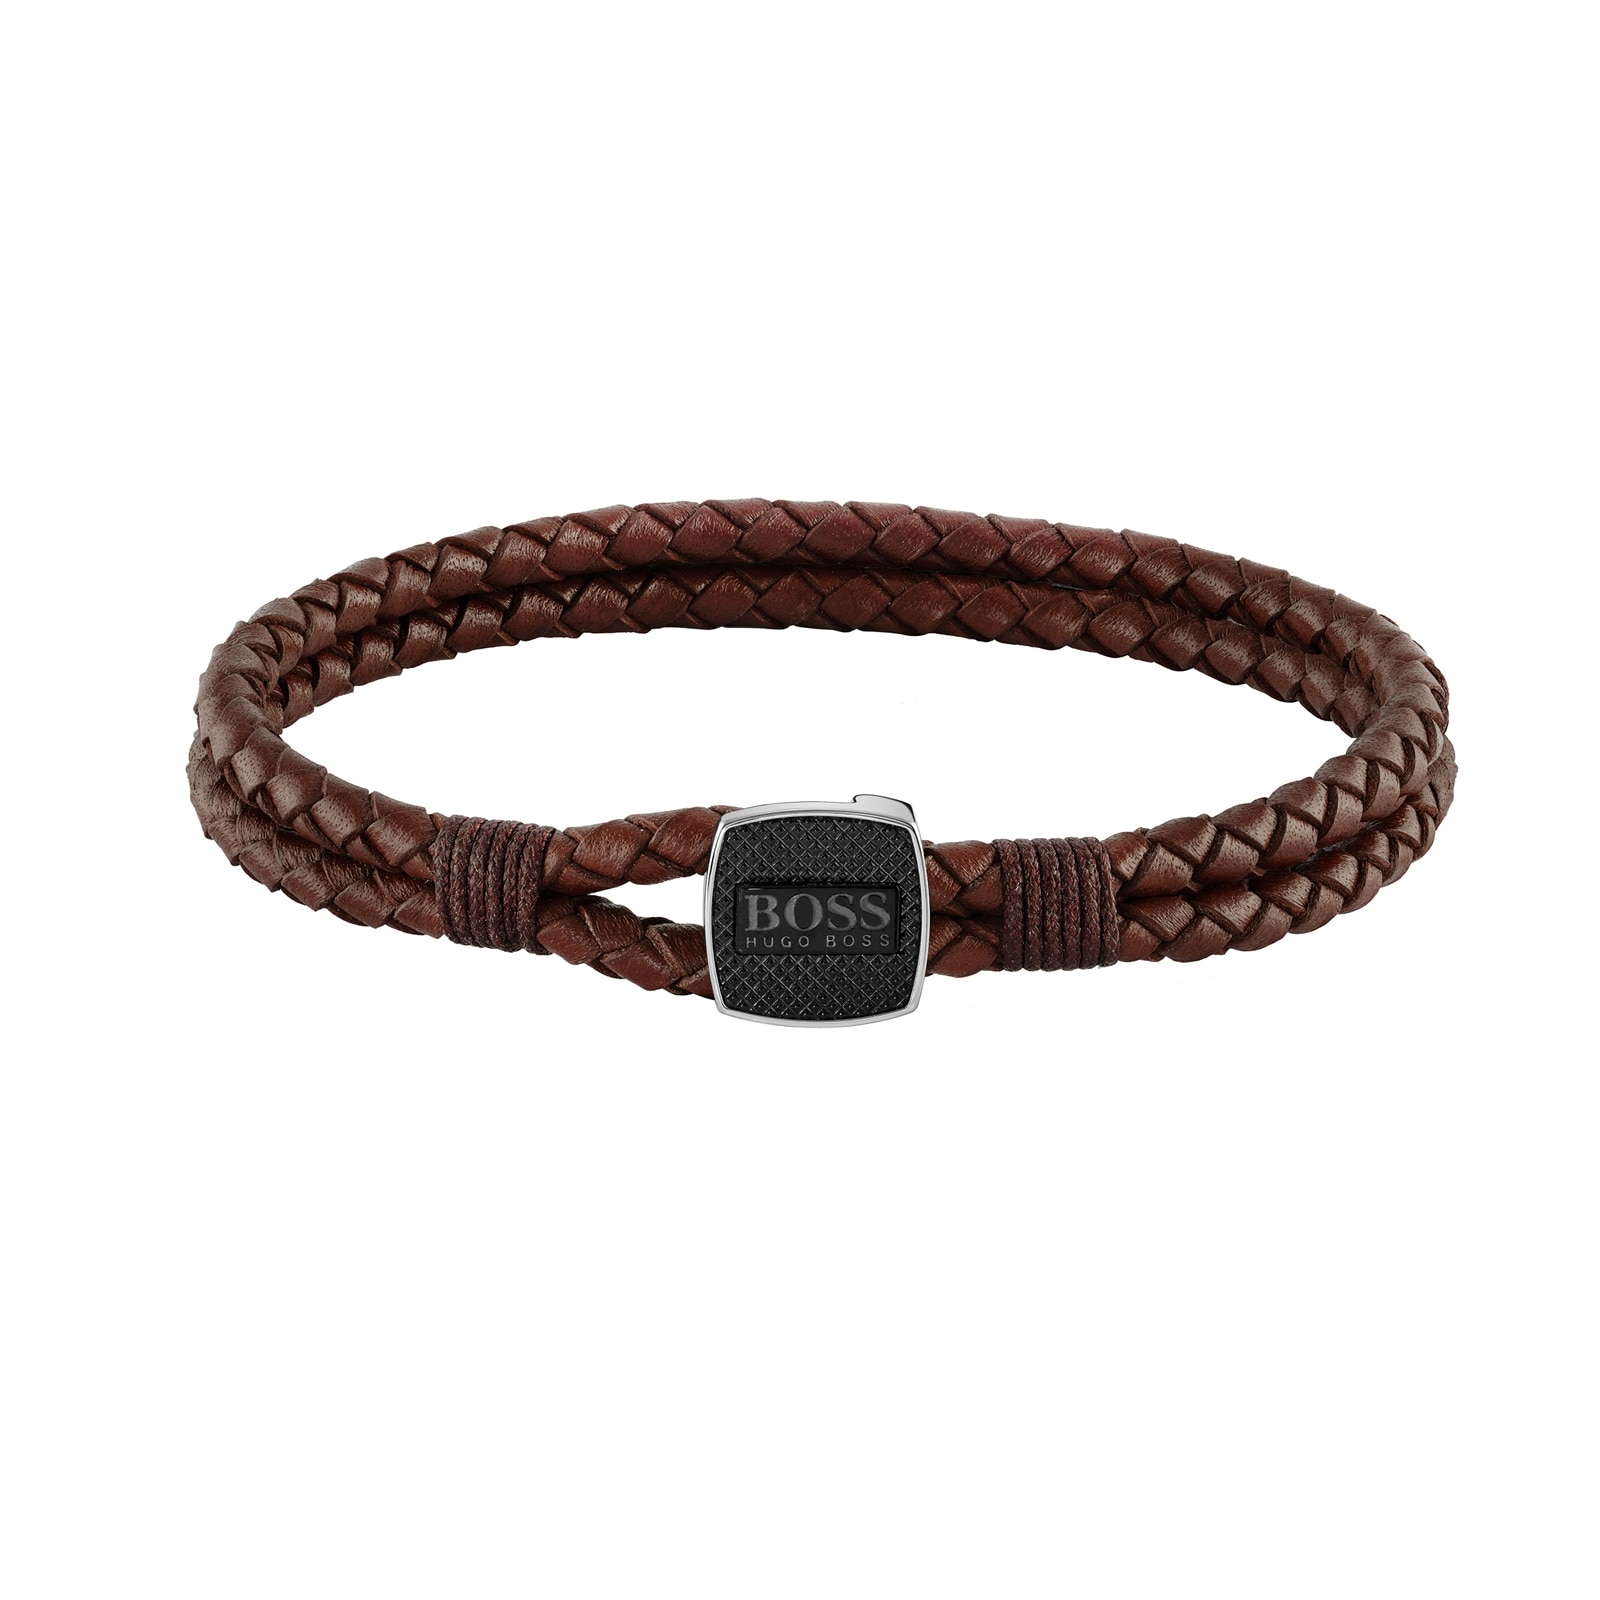 Seal Brown Leather Stainless Steel Bracelet